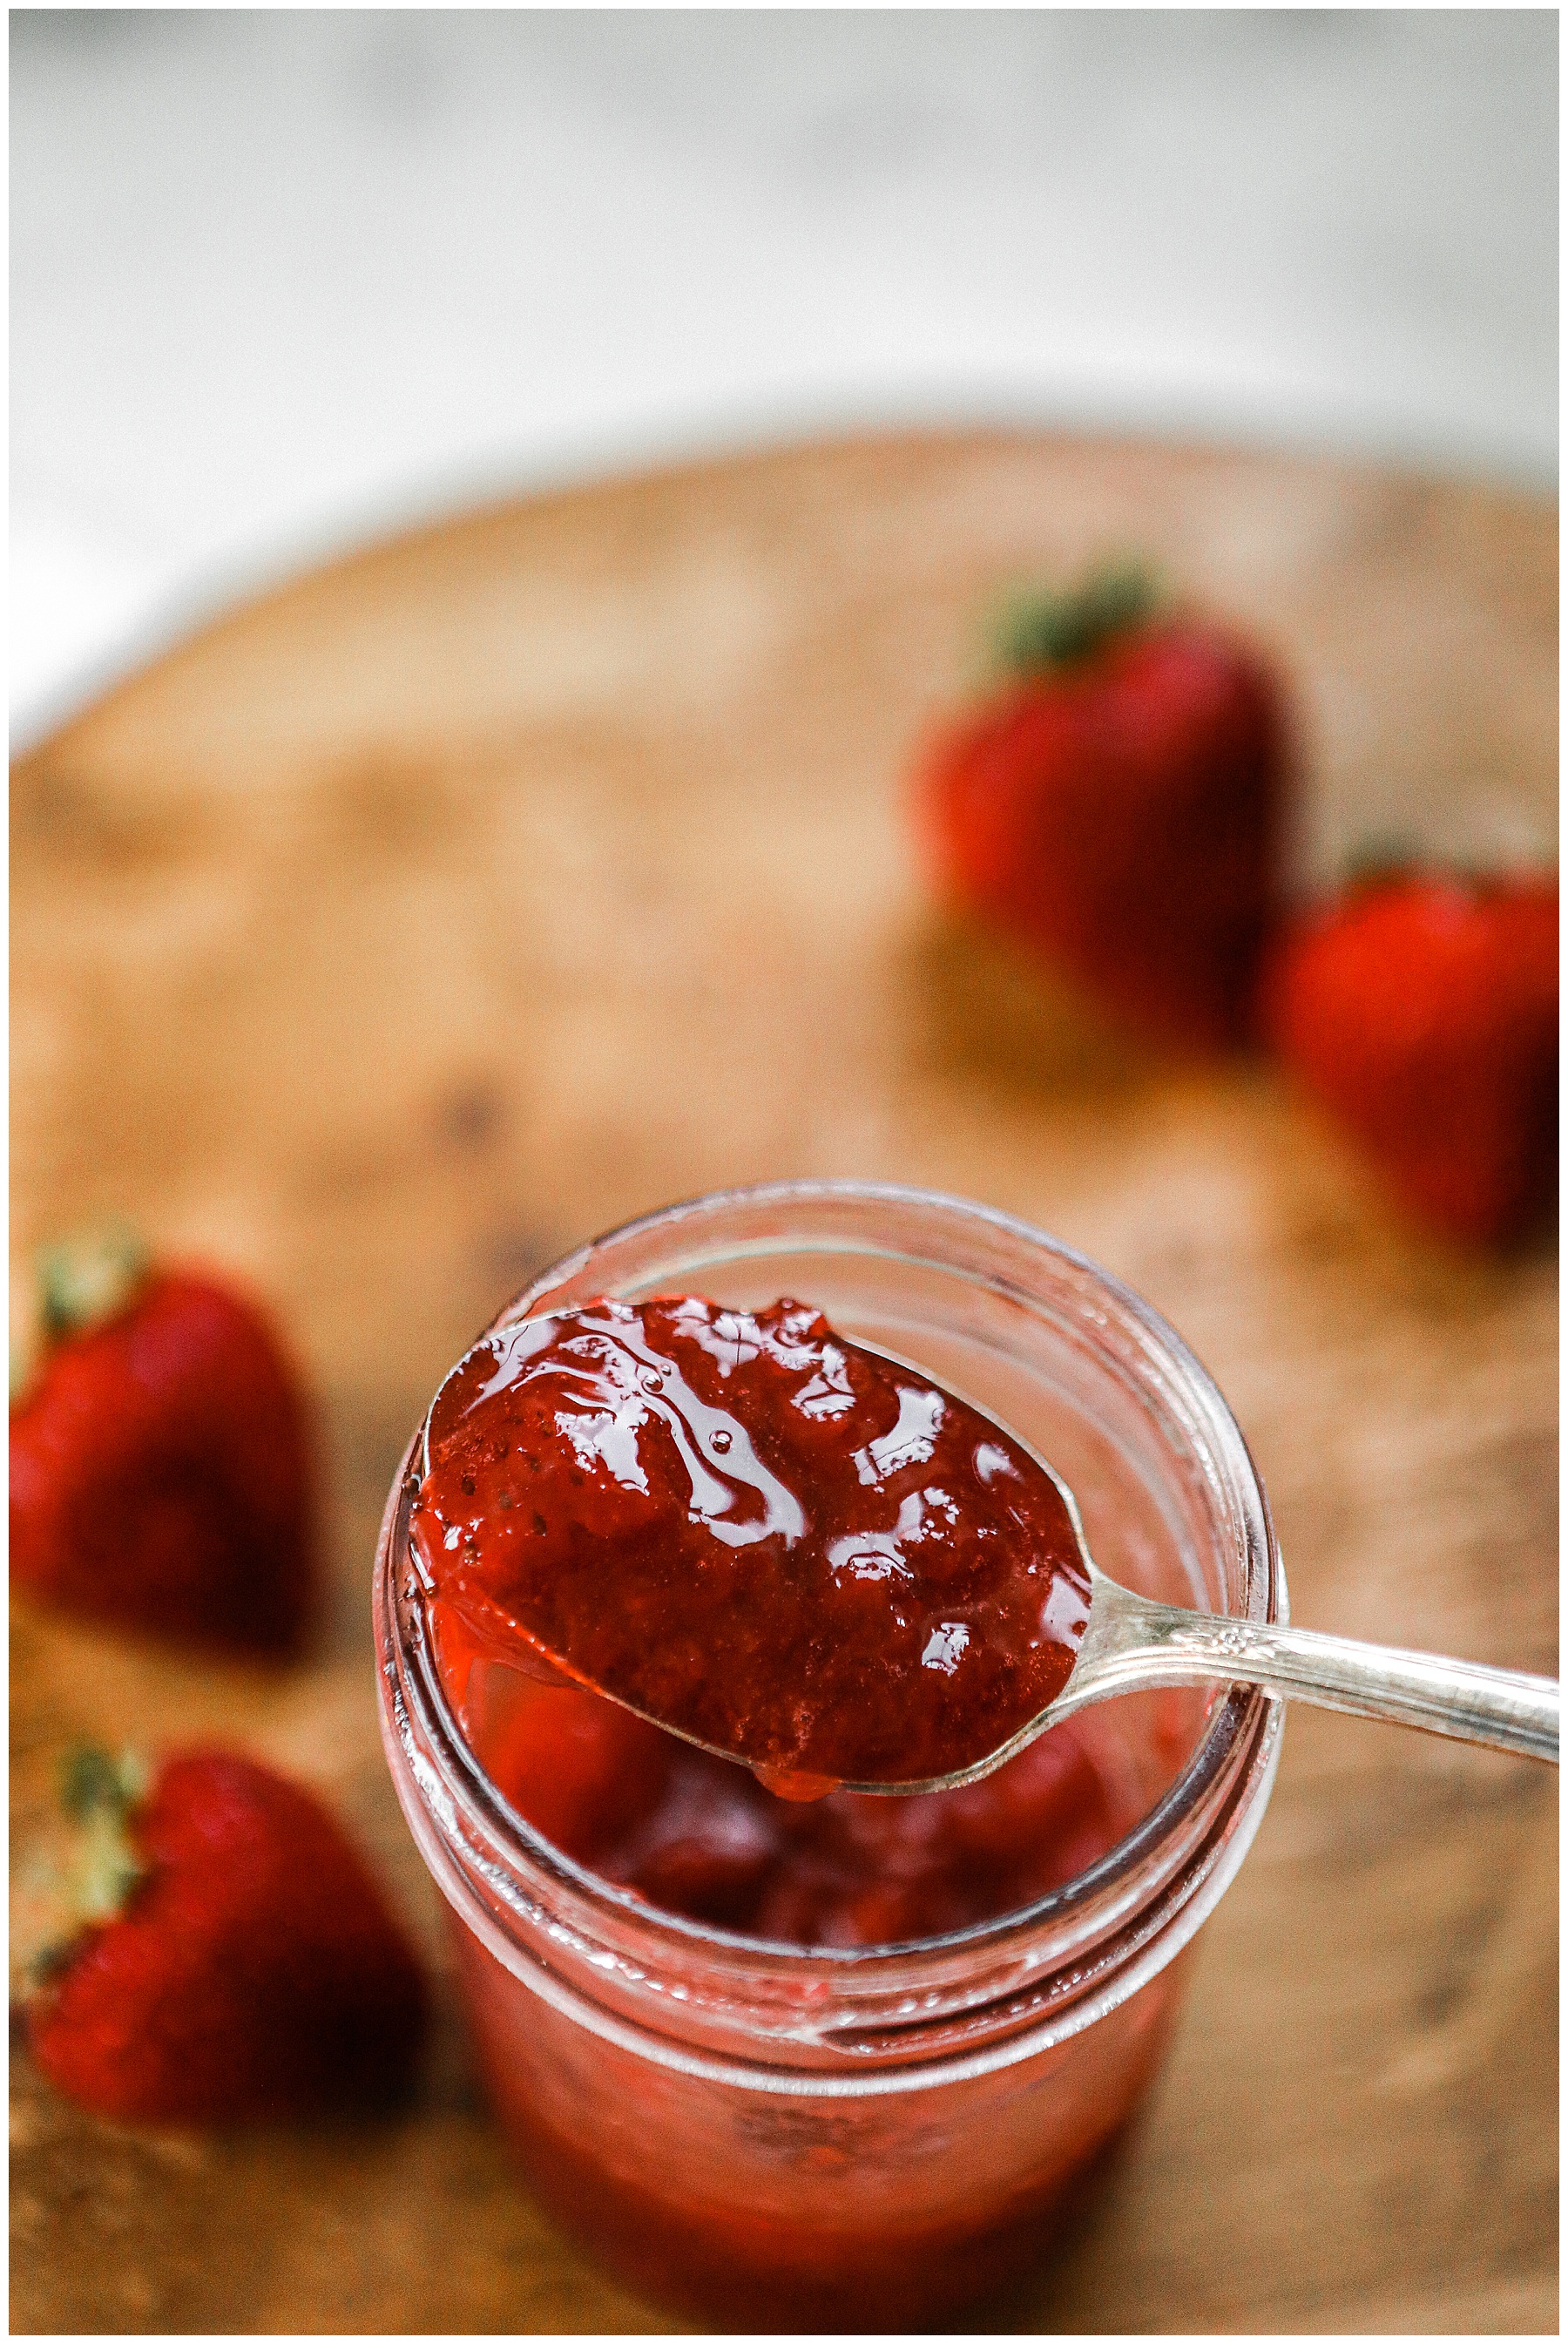 Spoon with strawberry jam